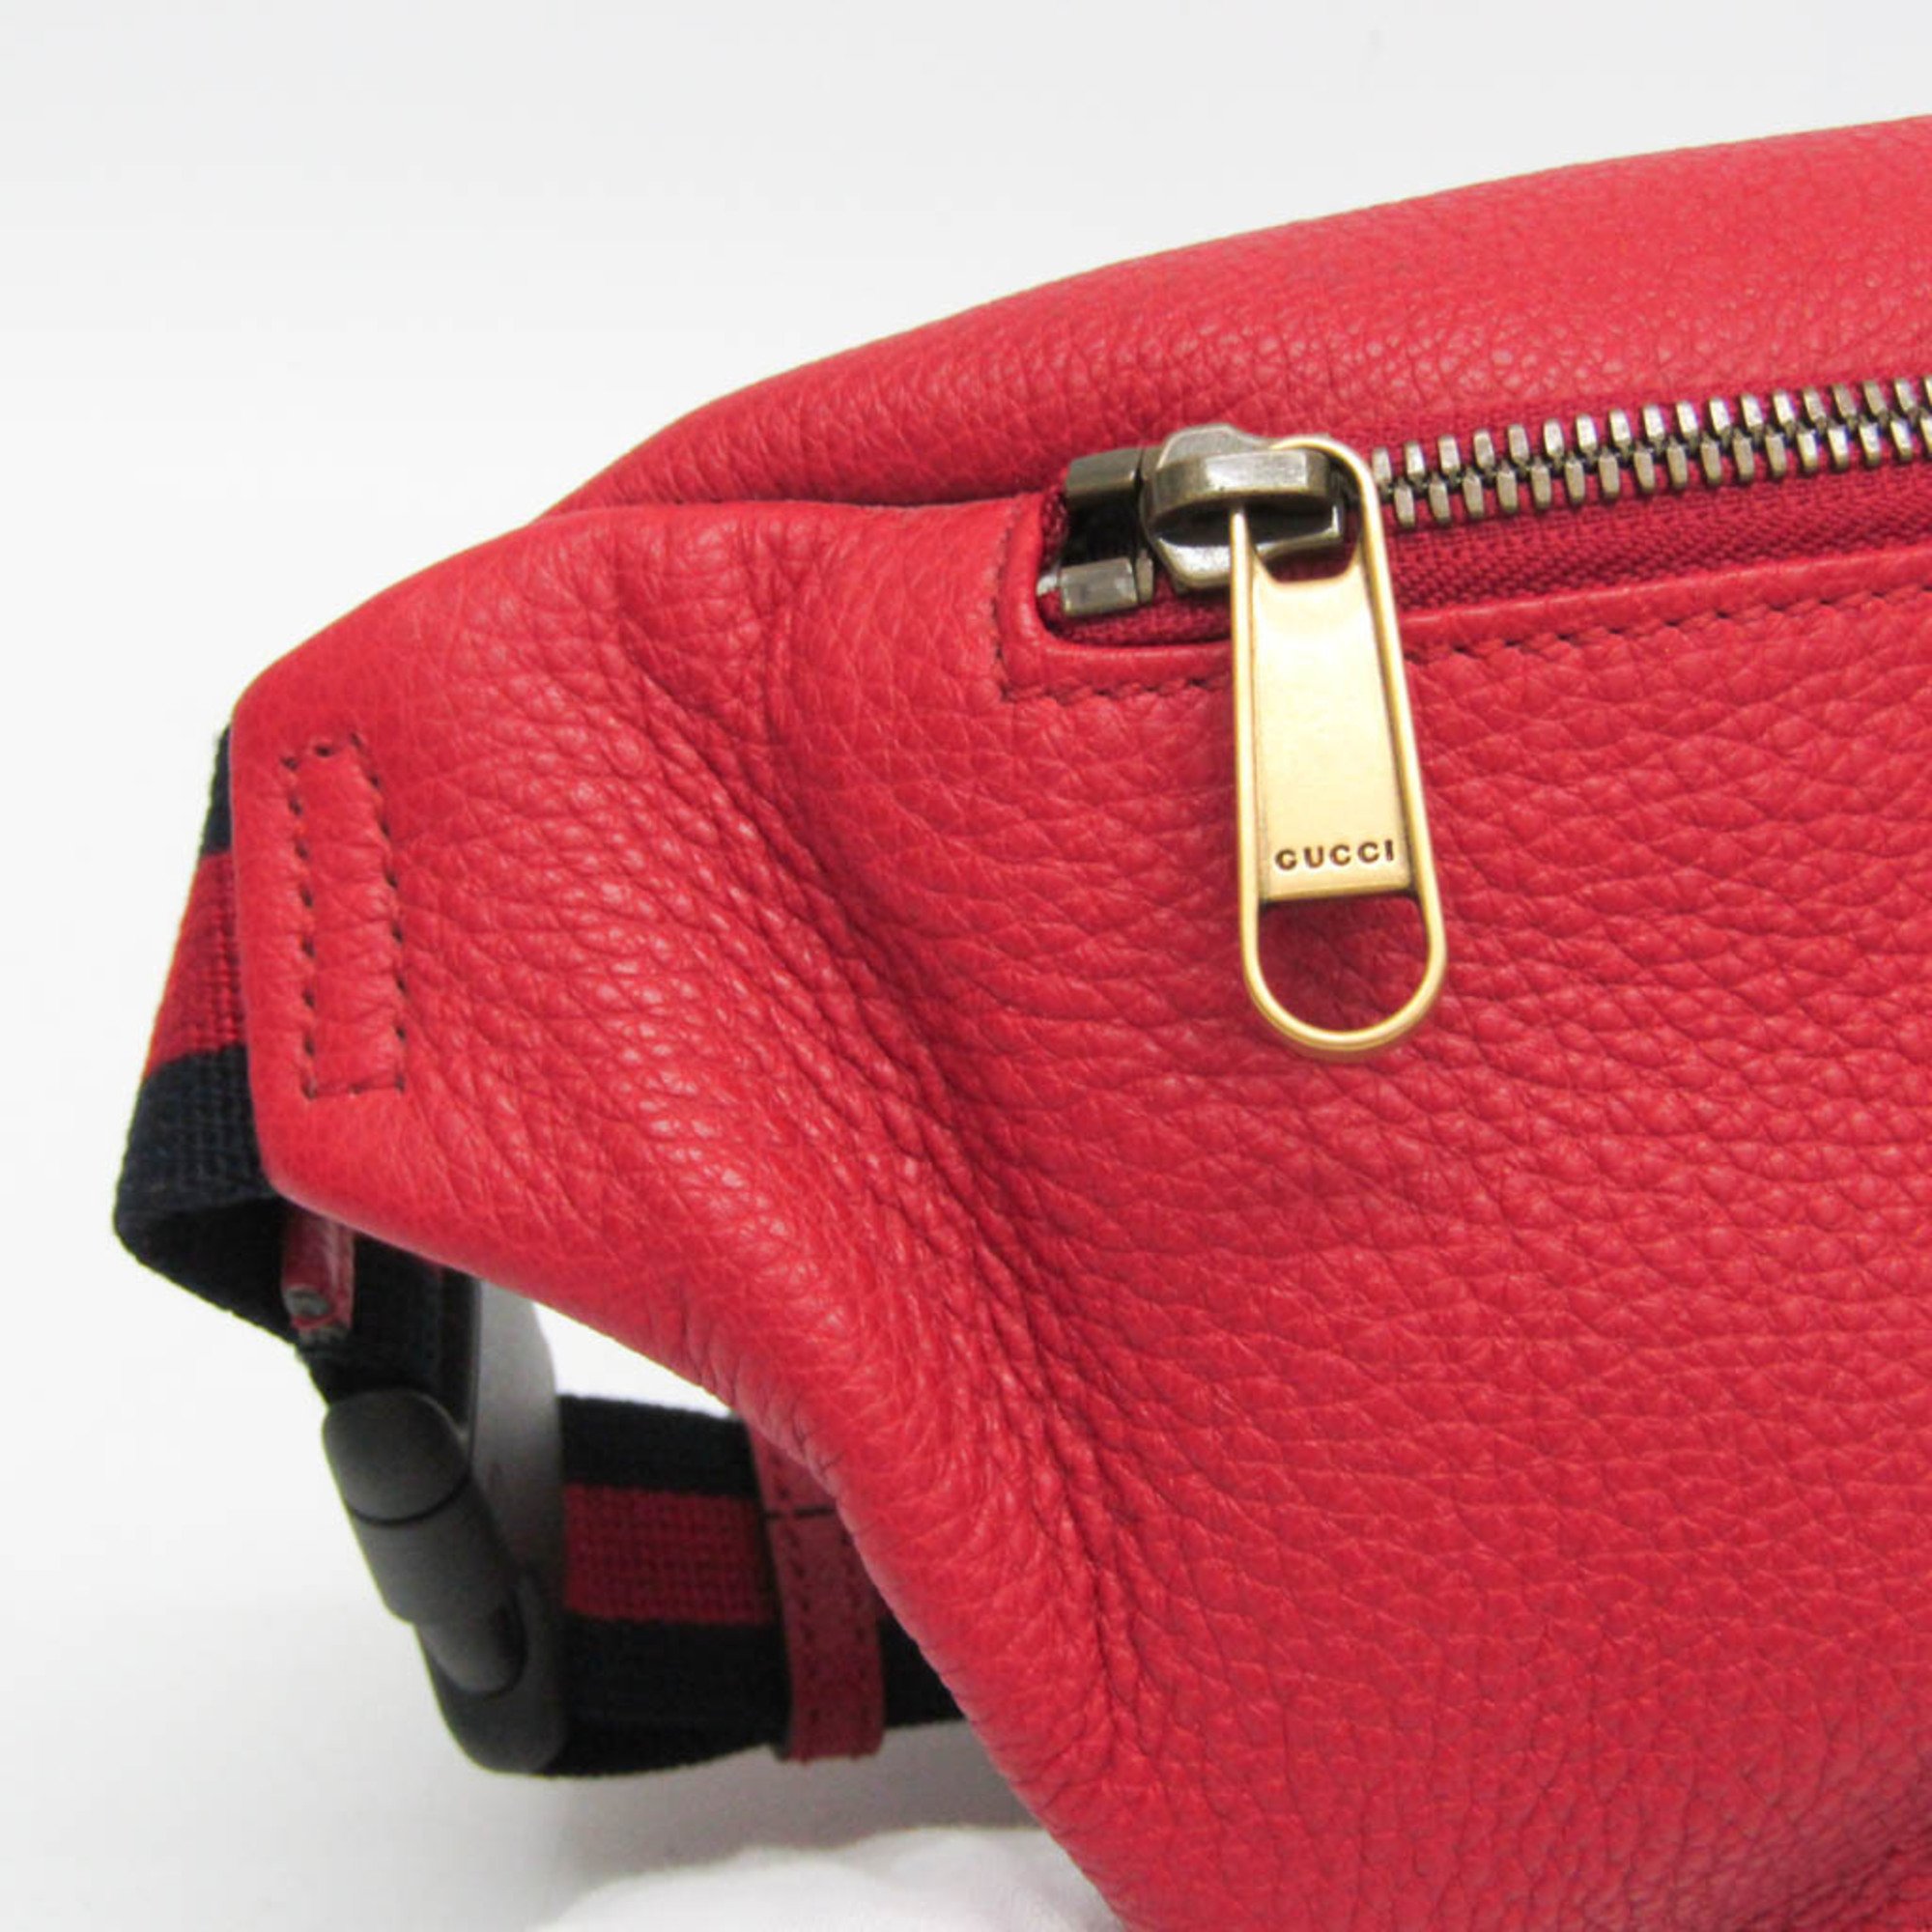 Gucci Logo Print 530412 Women,Men Leather Fanny Pack,Sling Bag Multi-color,Red Color